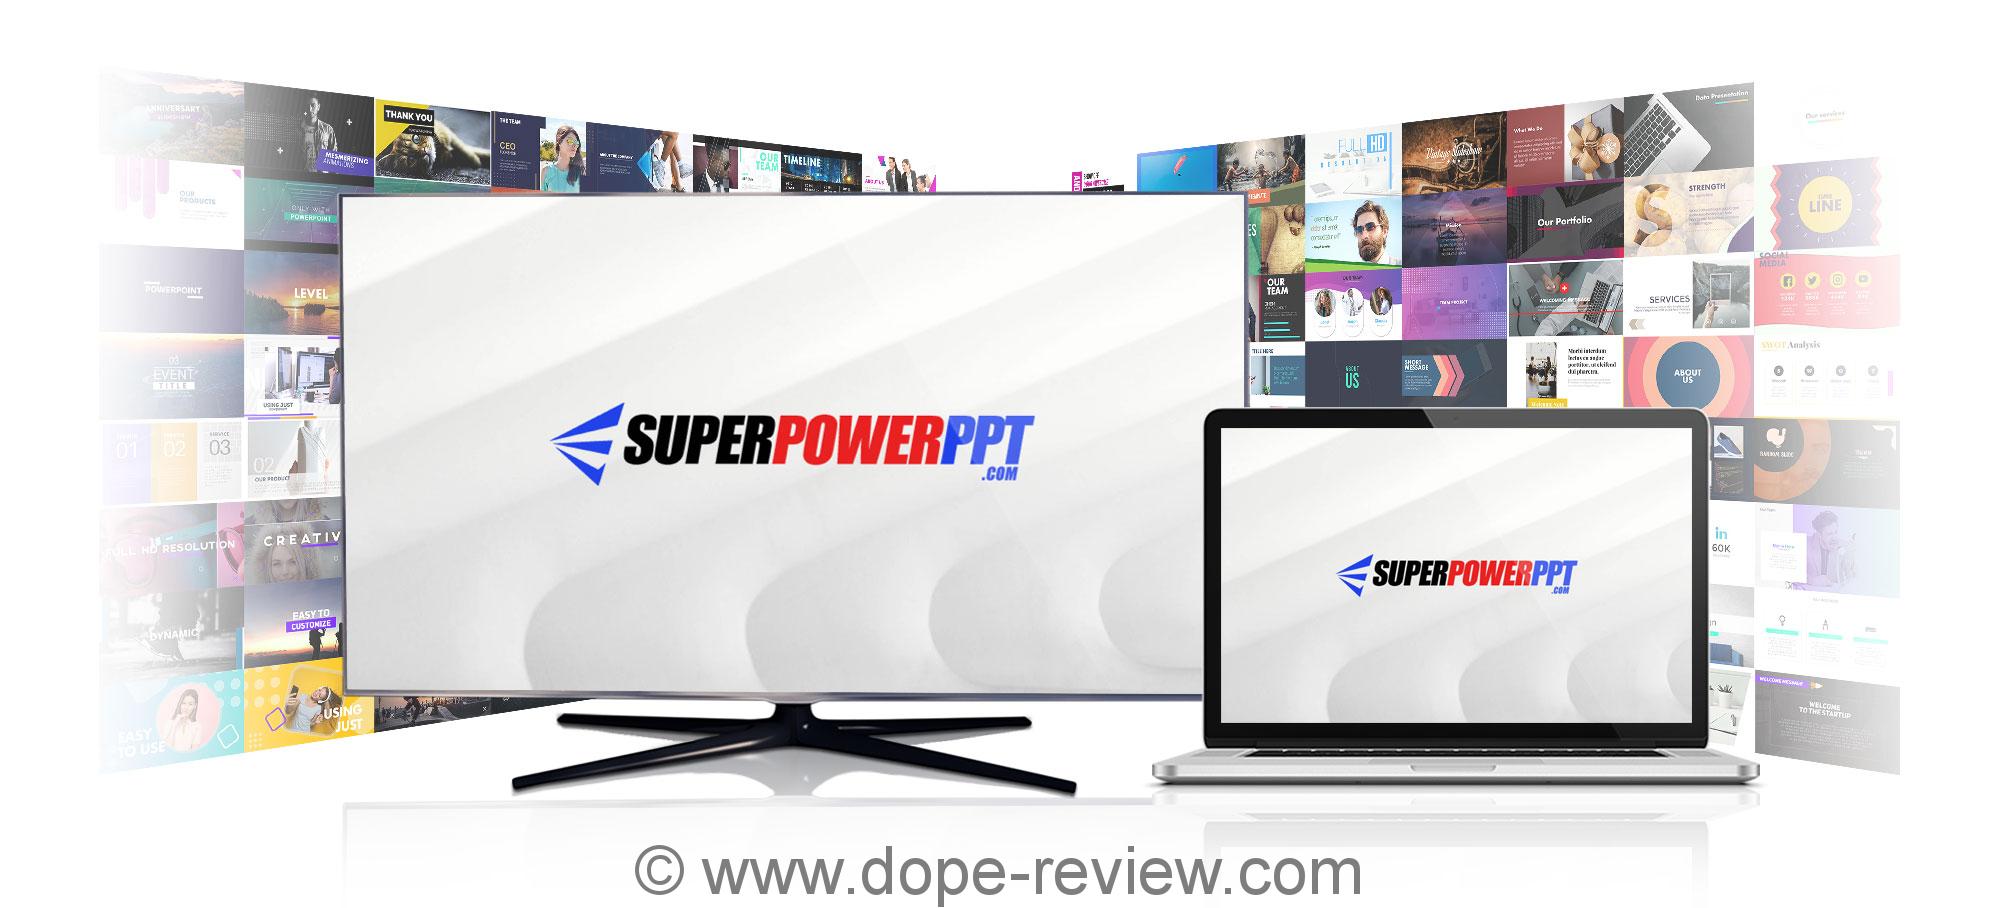 SuperPowerPPT Review